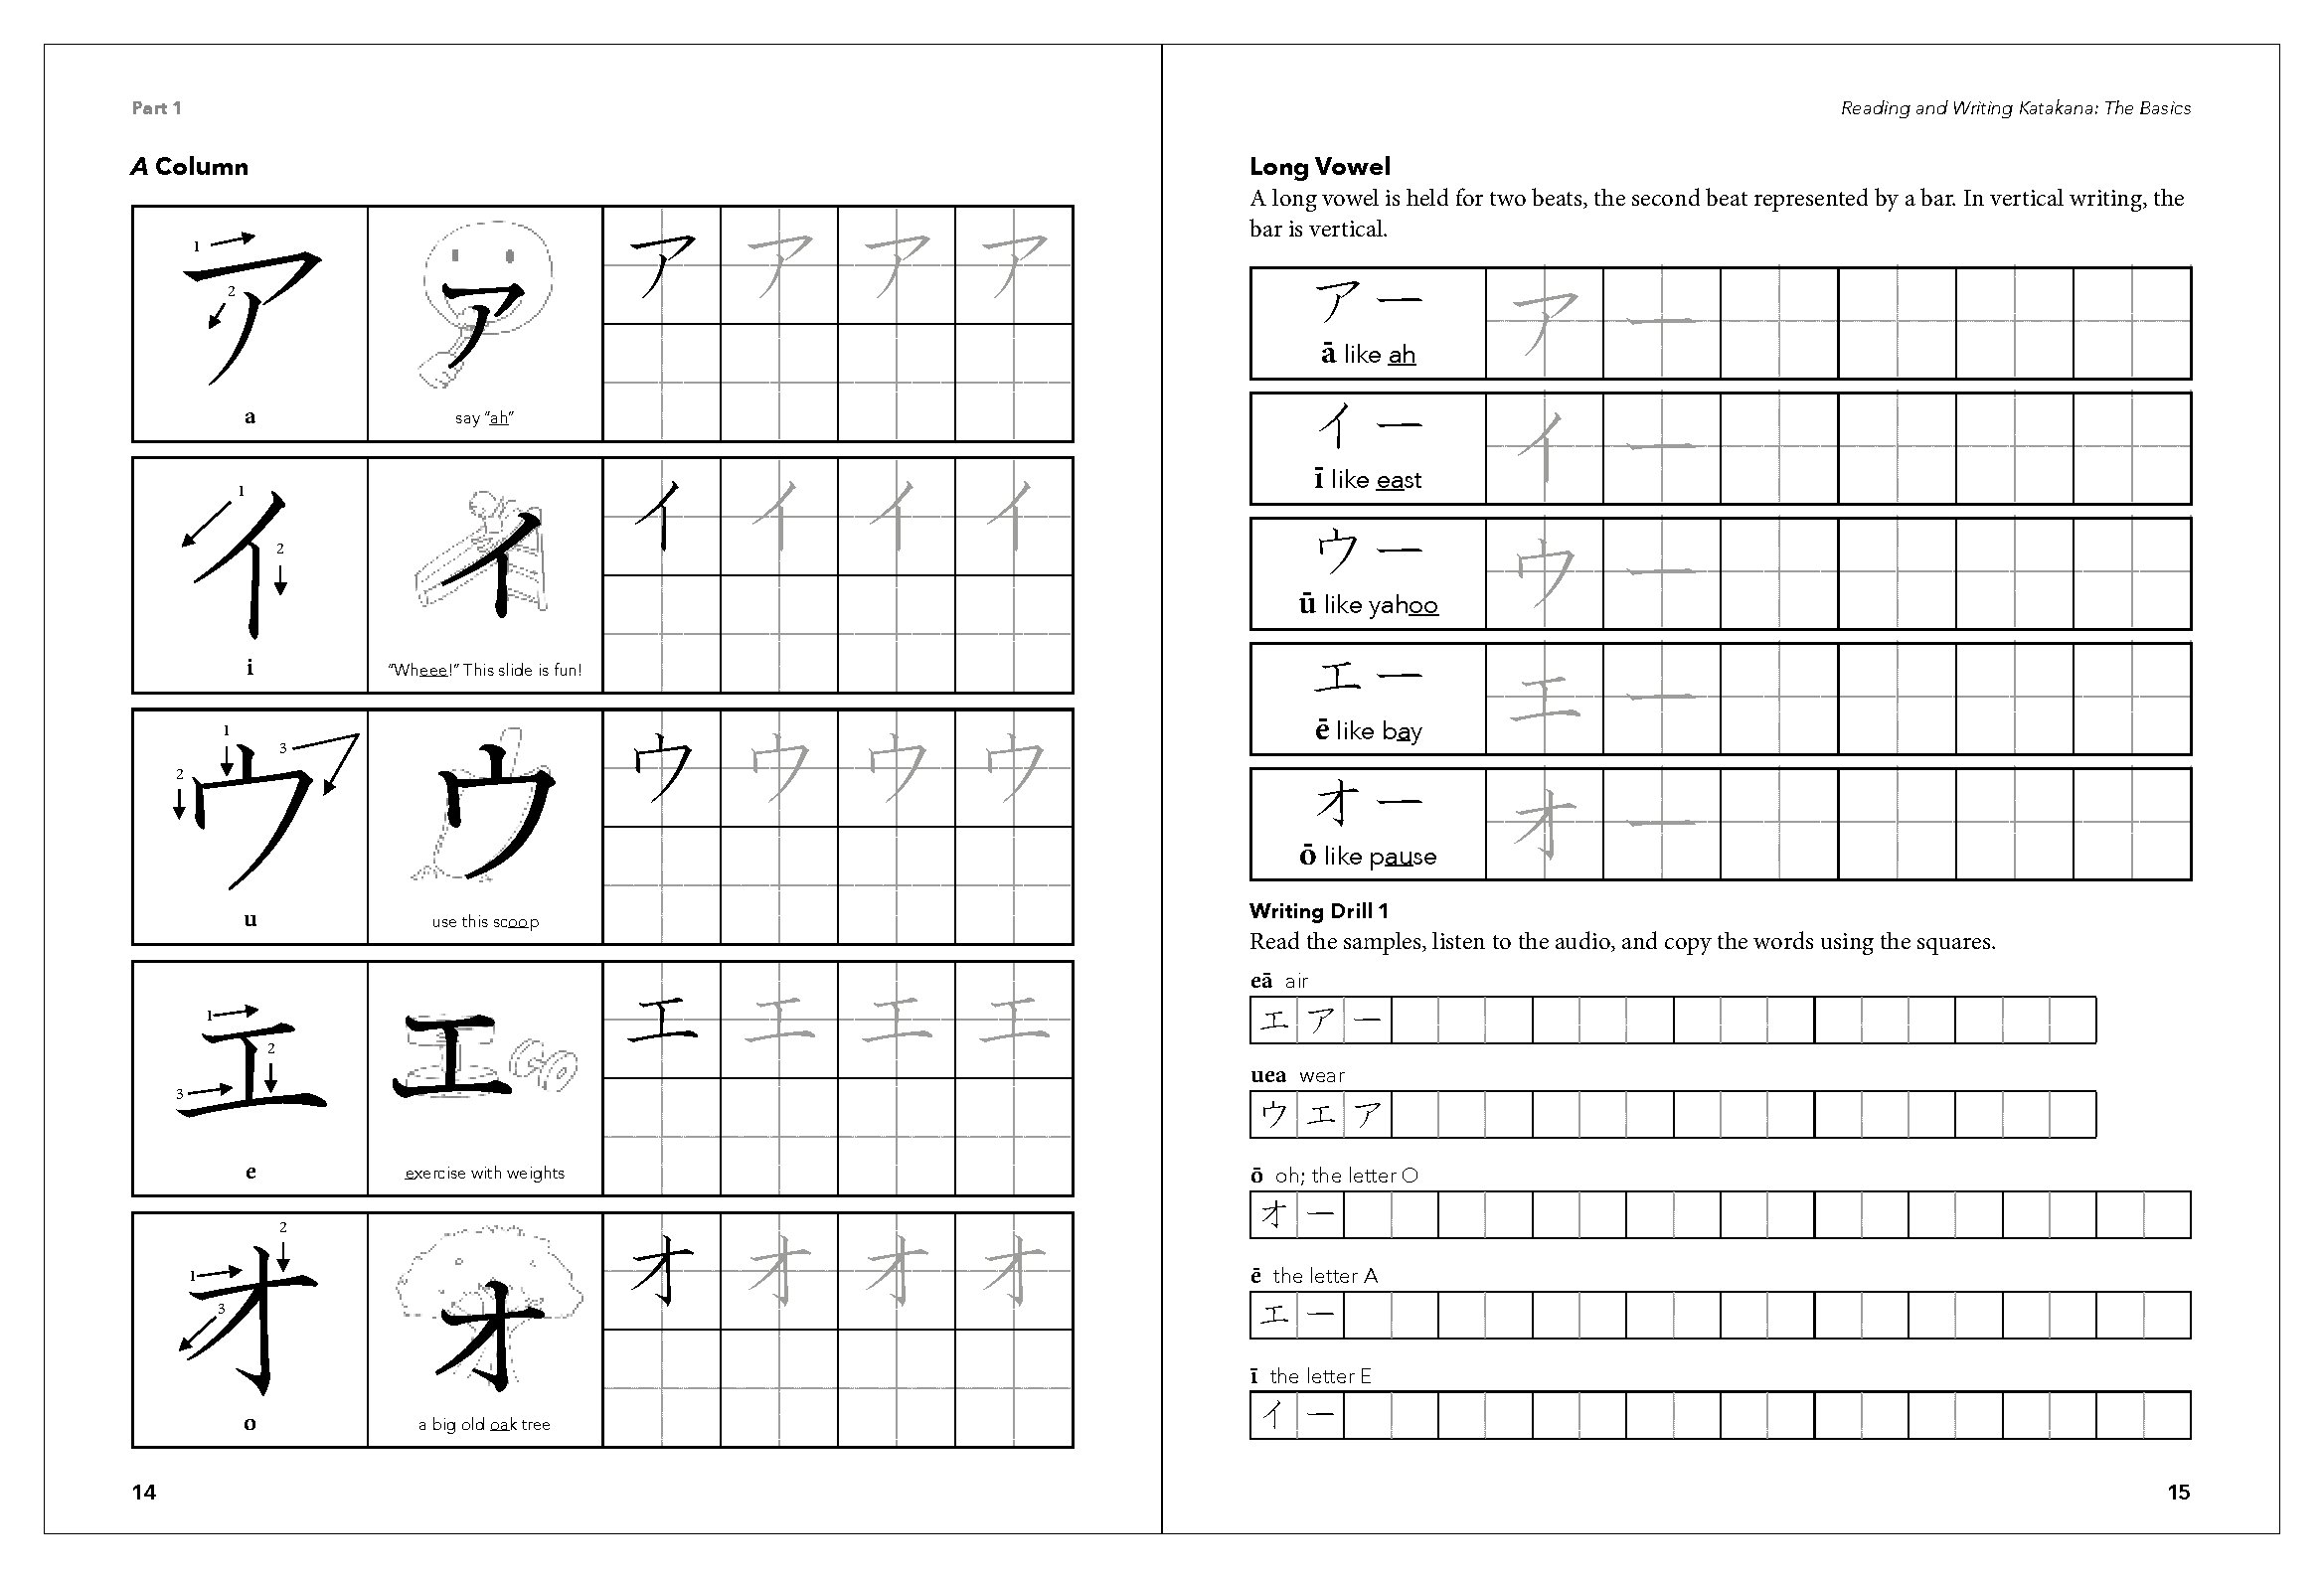 Reading and Writing Japanese Katakana